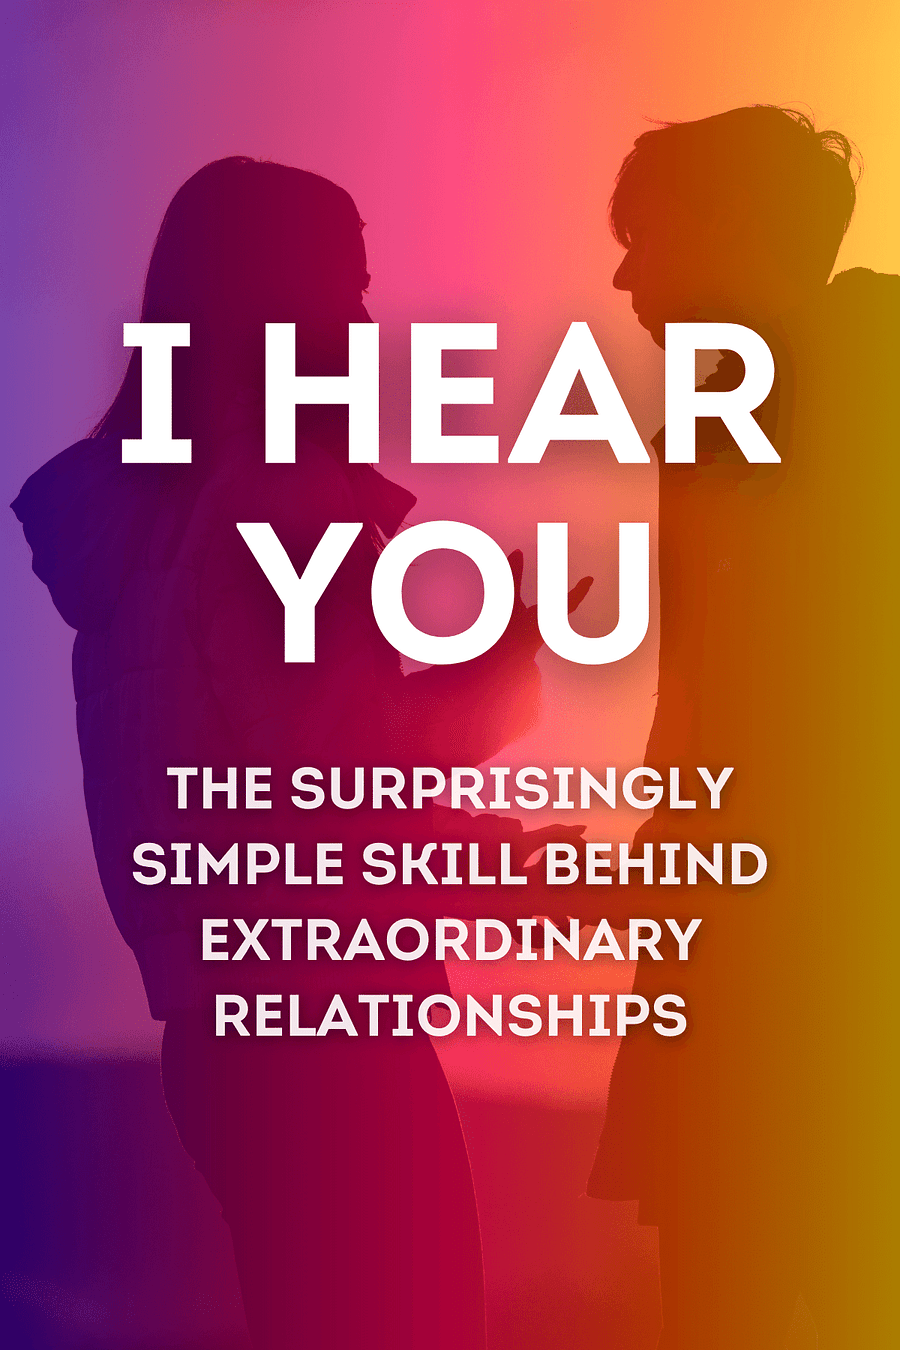 I Hear You by Michael S. Sorensen - Book Summary